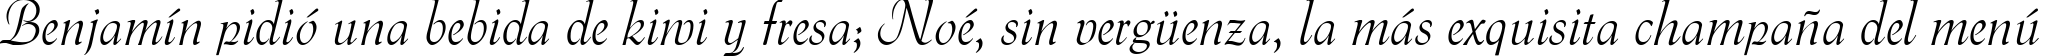 Пример написания шрифтом Menuet script текста на испанском